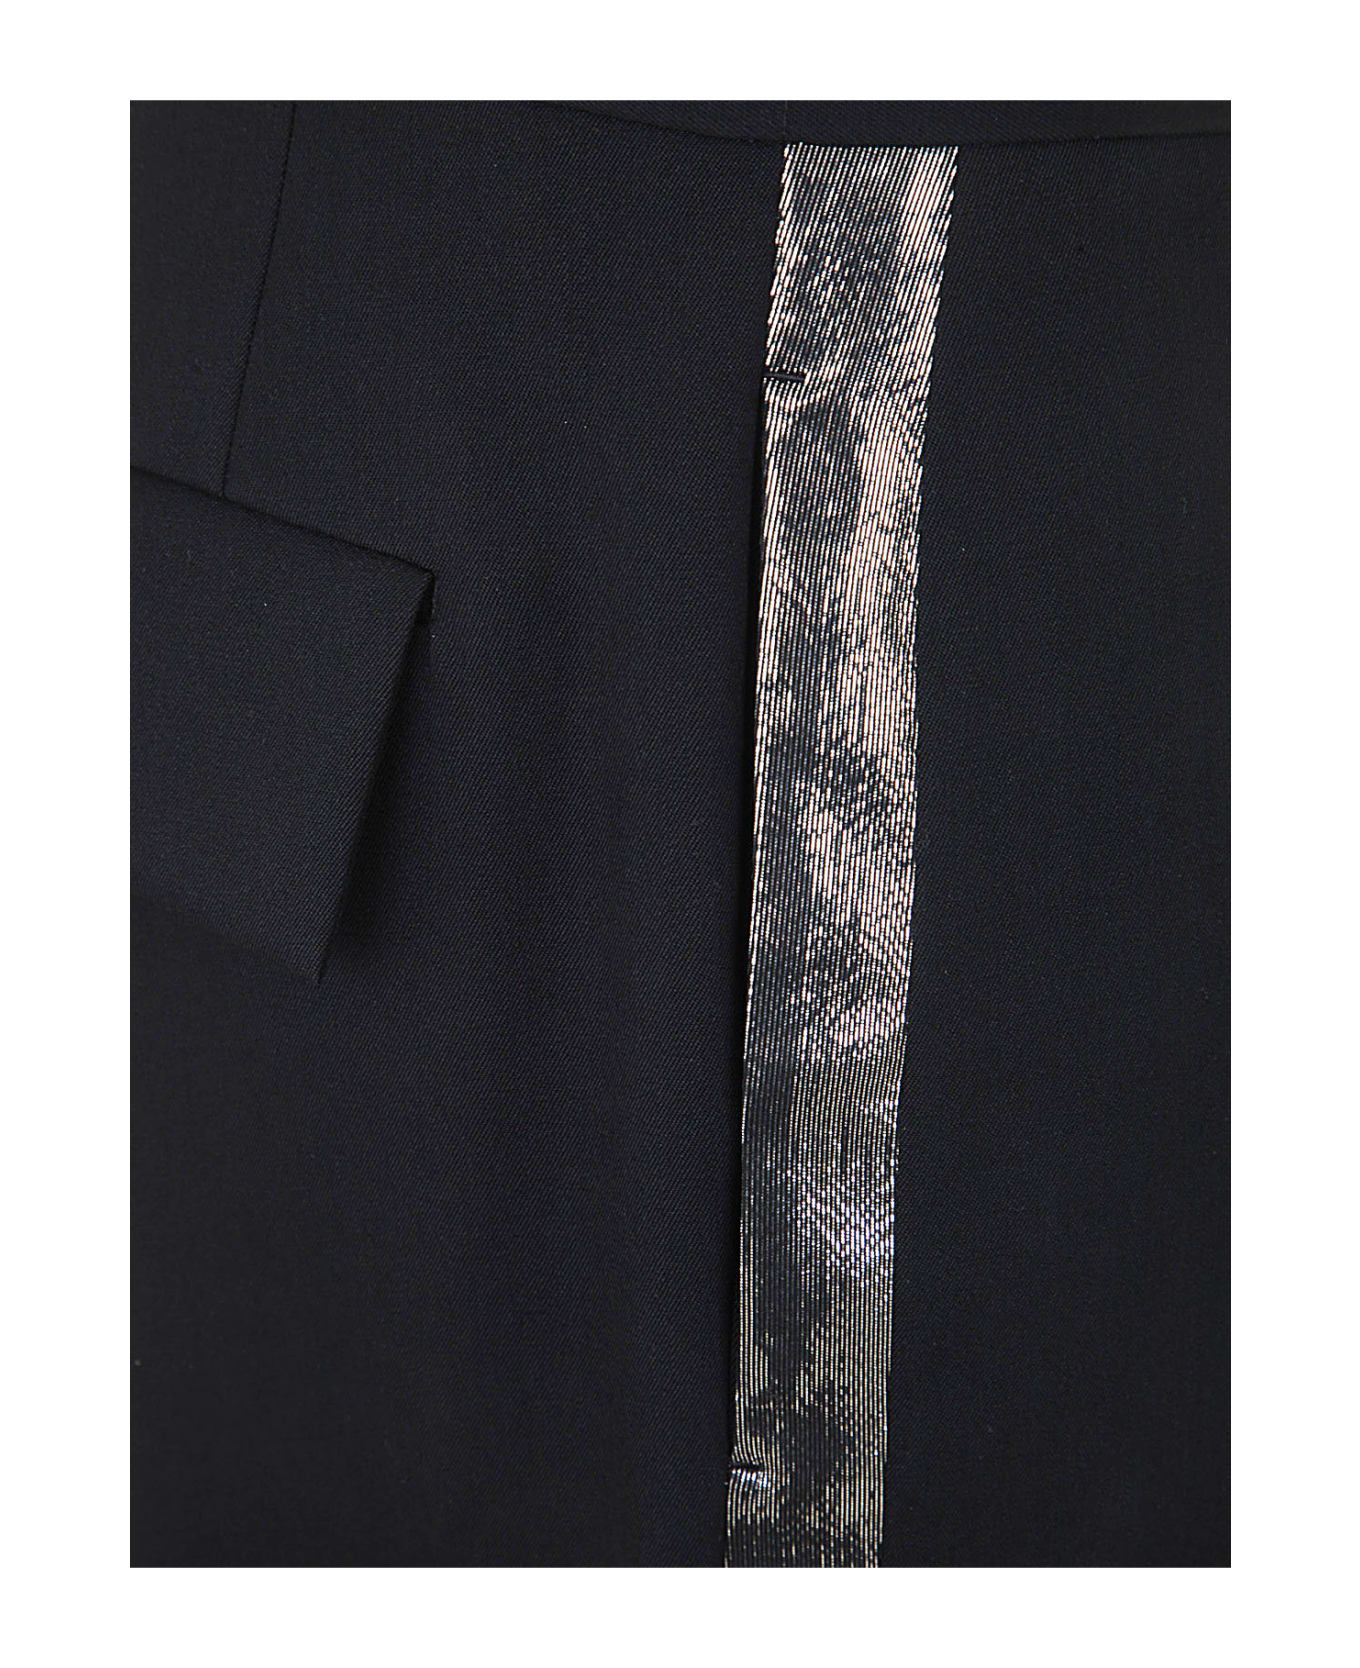 Sapio Wool Trousers Sideband Detail - Black ボトムス